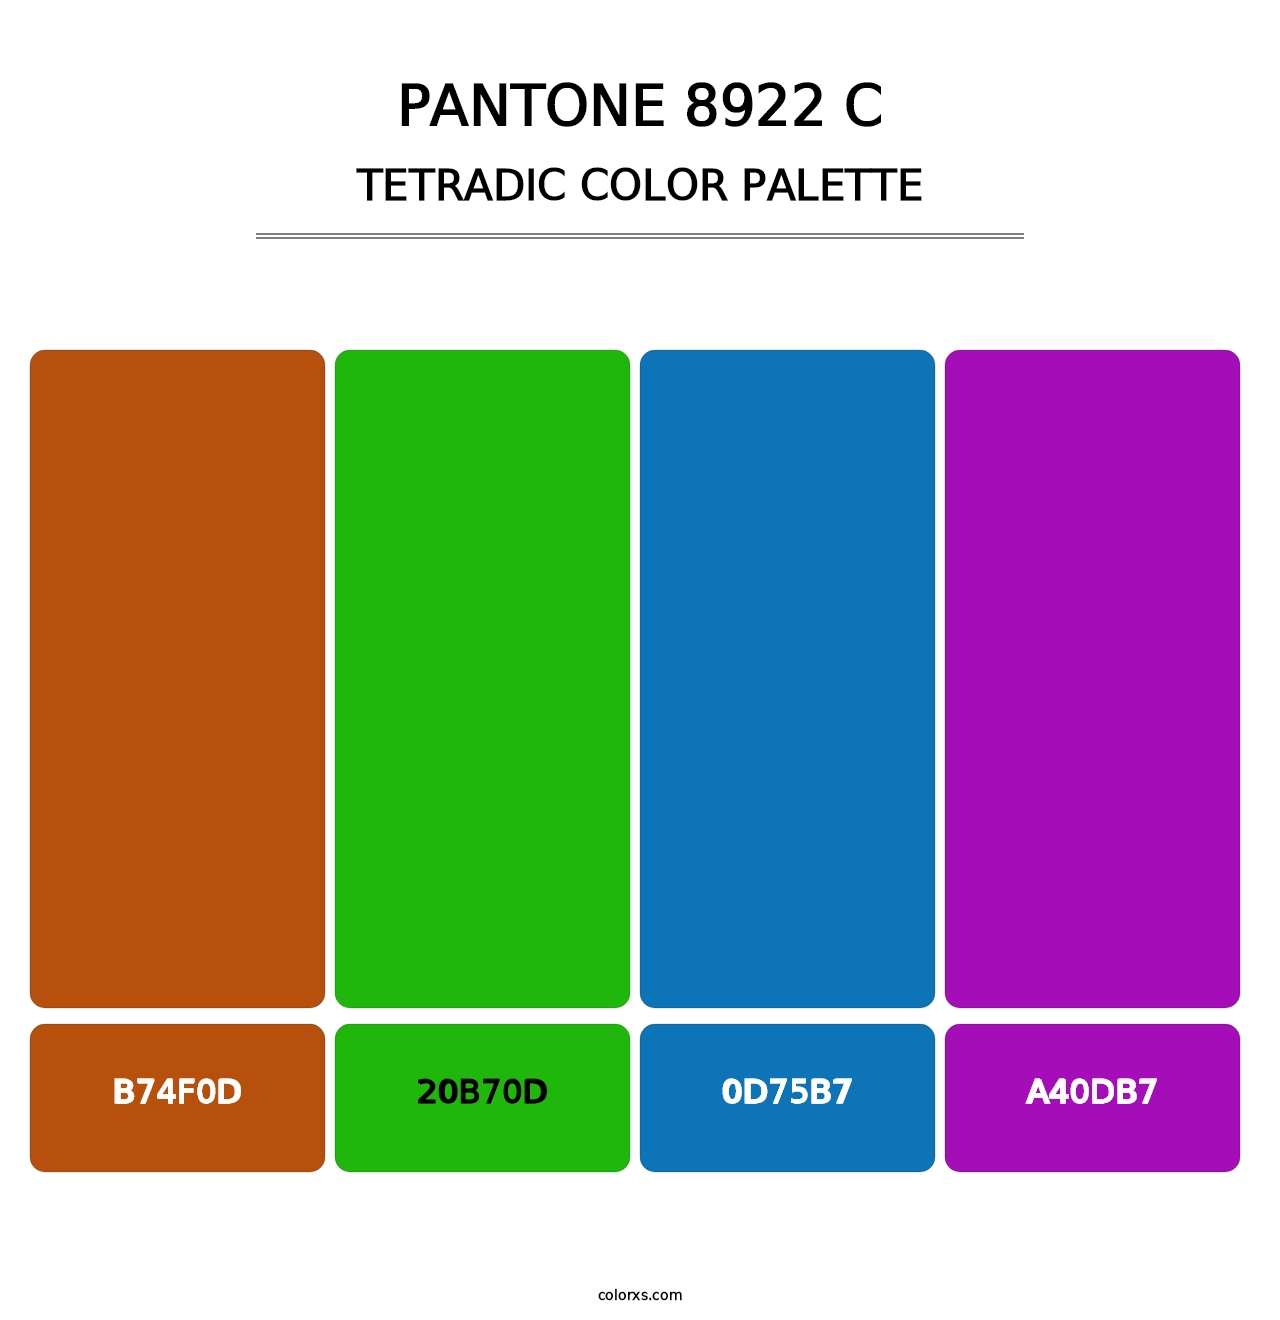 PANTONE 8922 C - Tetradic Color Palette